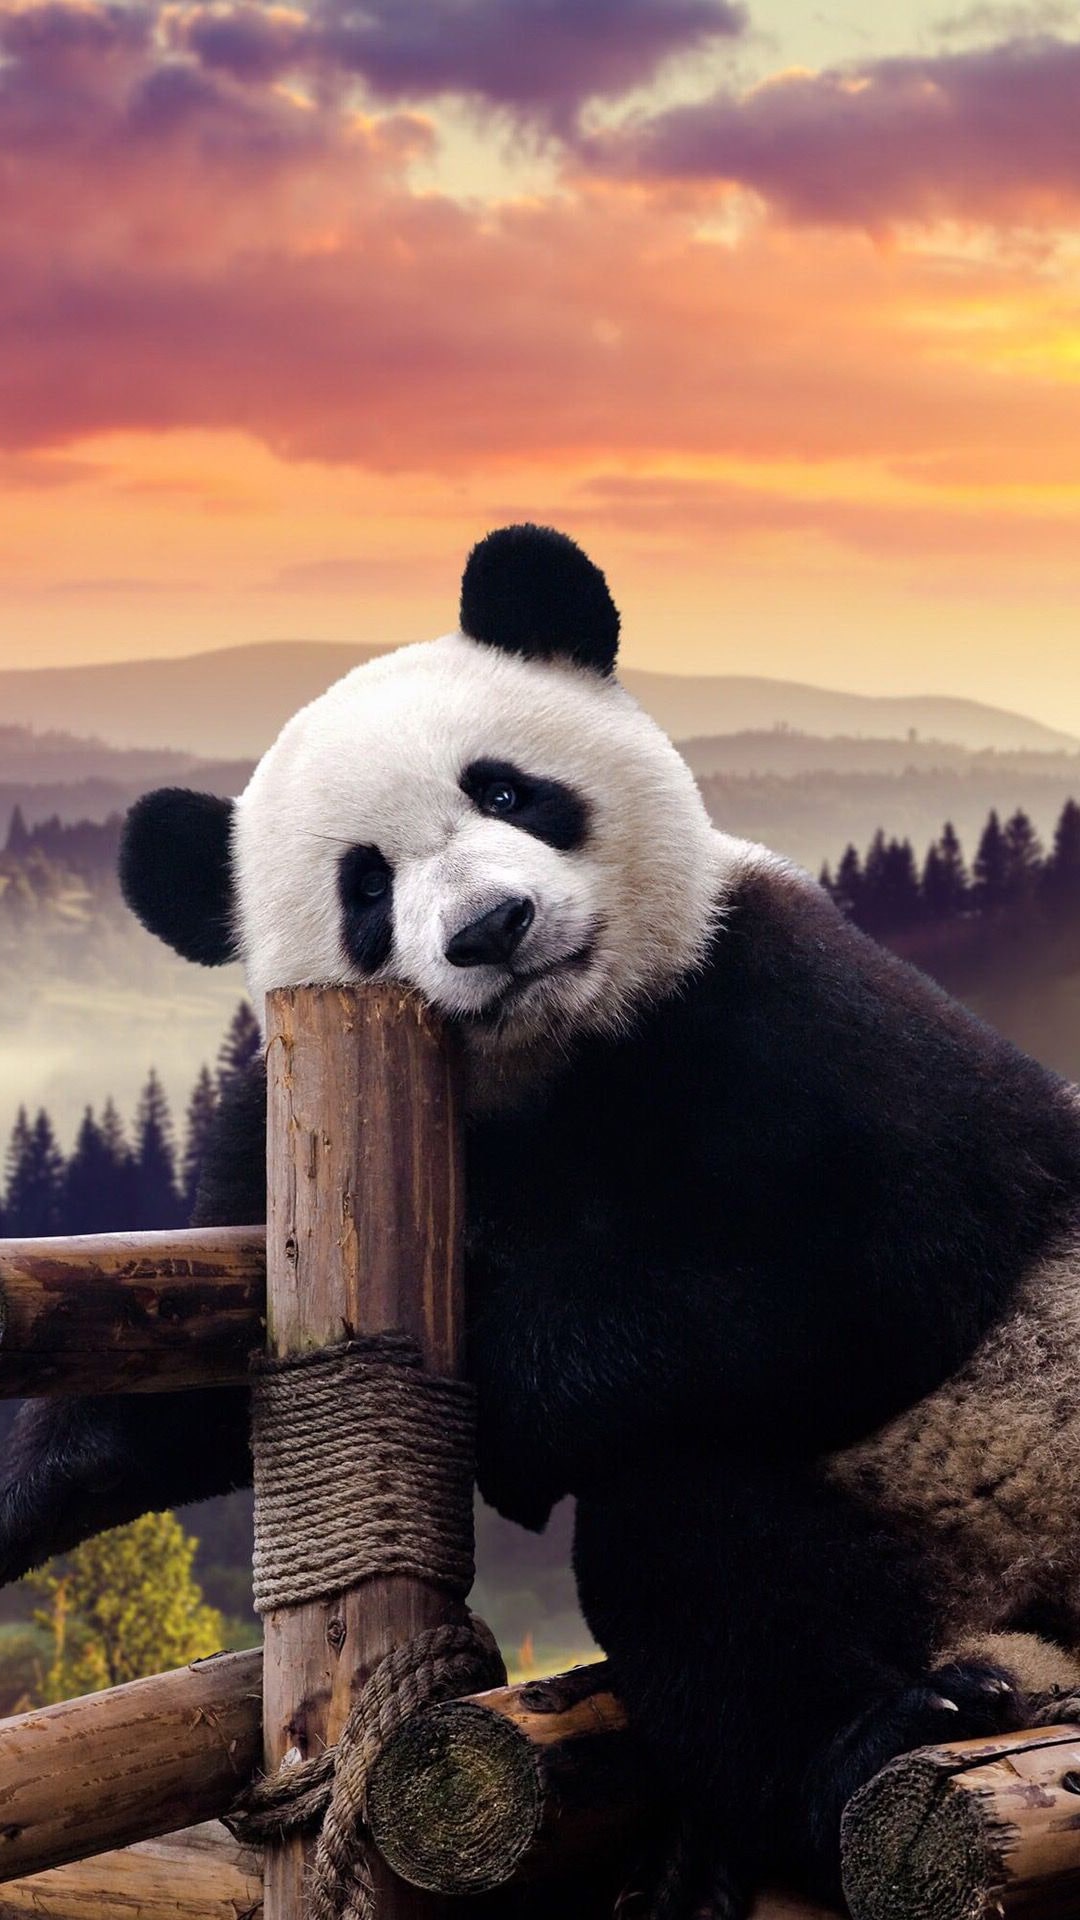 Cool Panda Wallpaper For Computer : Hd Cute Panda Hd Backgrounds Tumblr